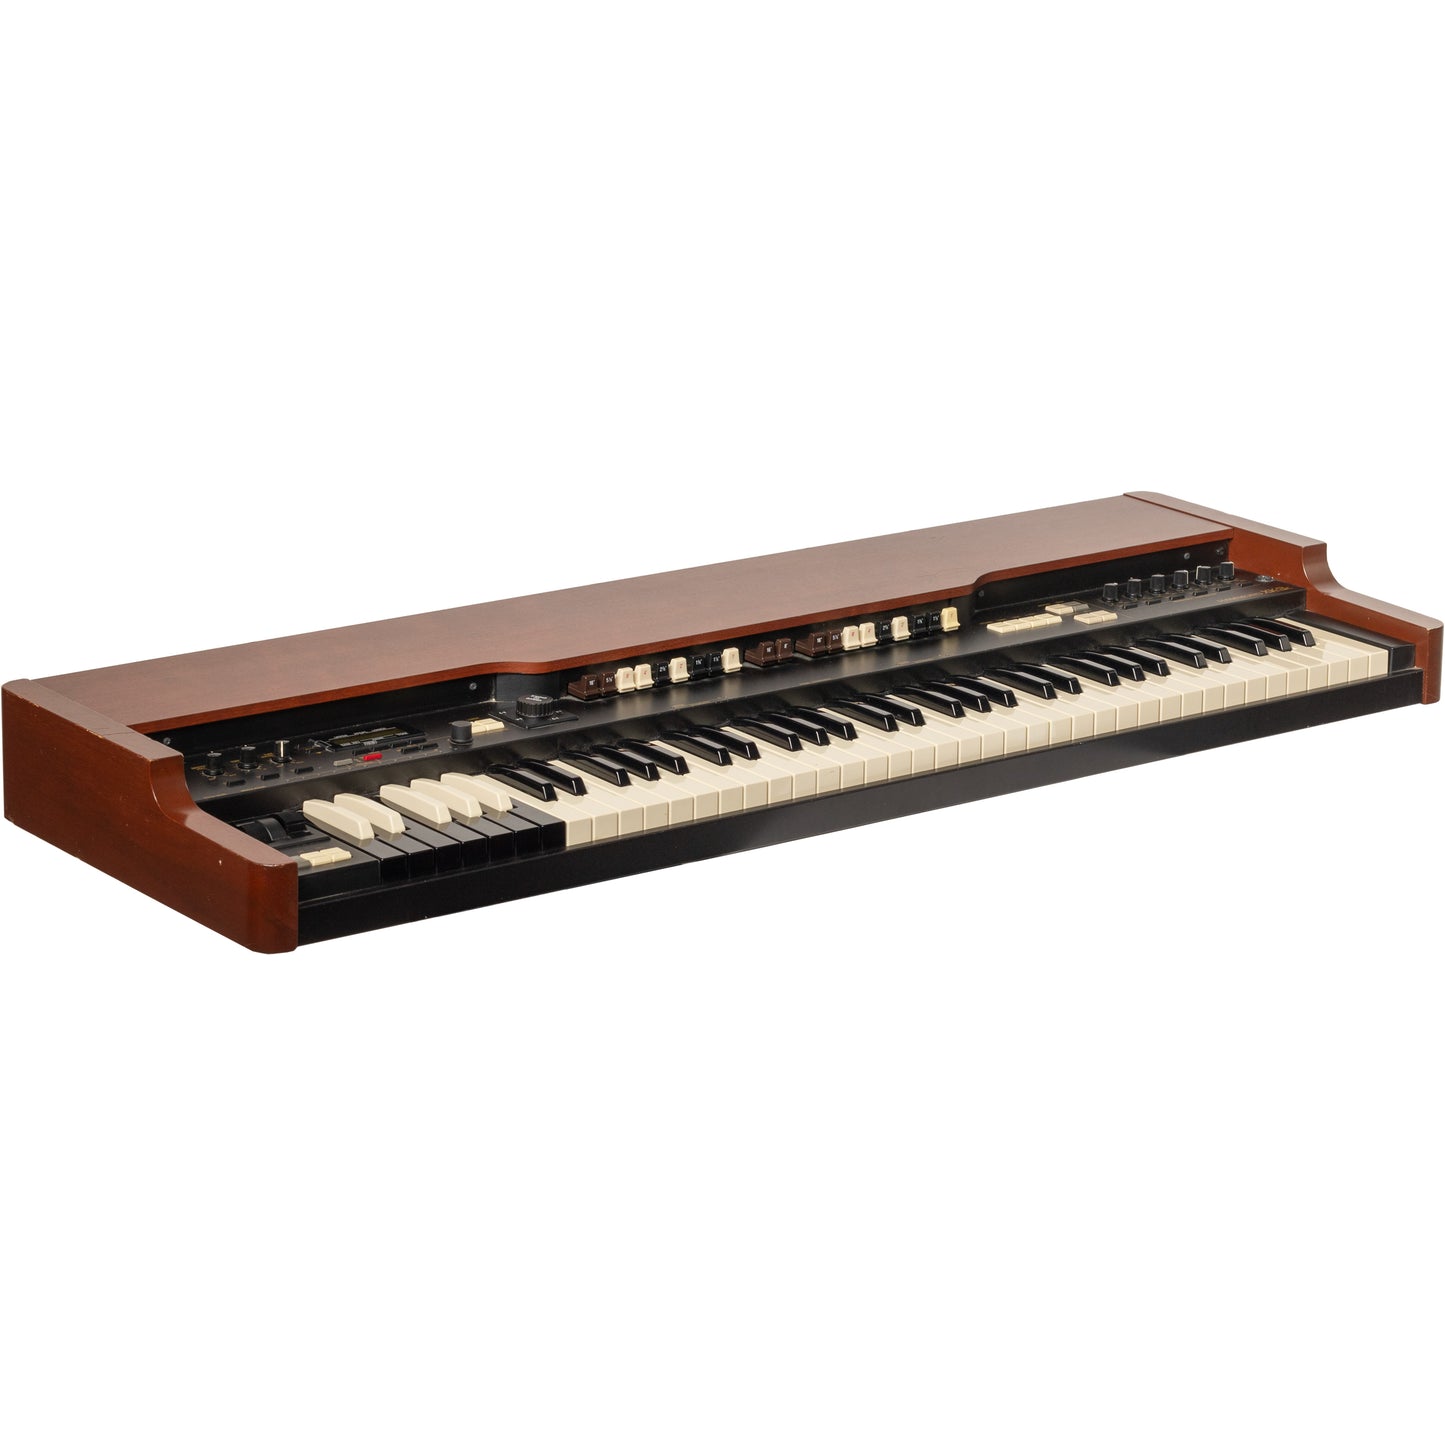 Hammond XK-3c 61-Key Modeling Organ